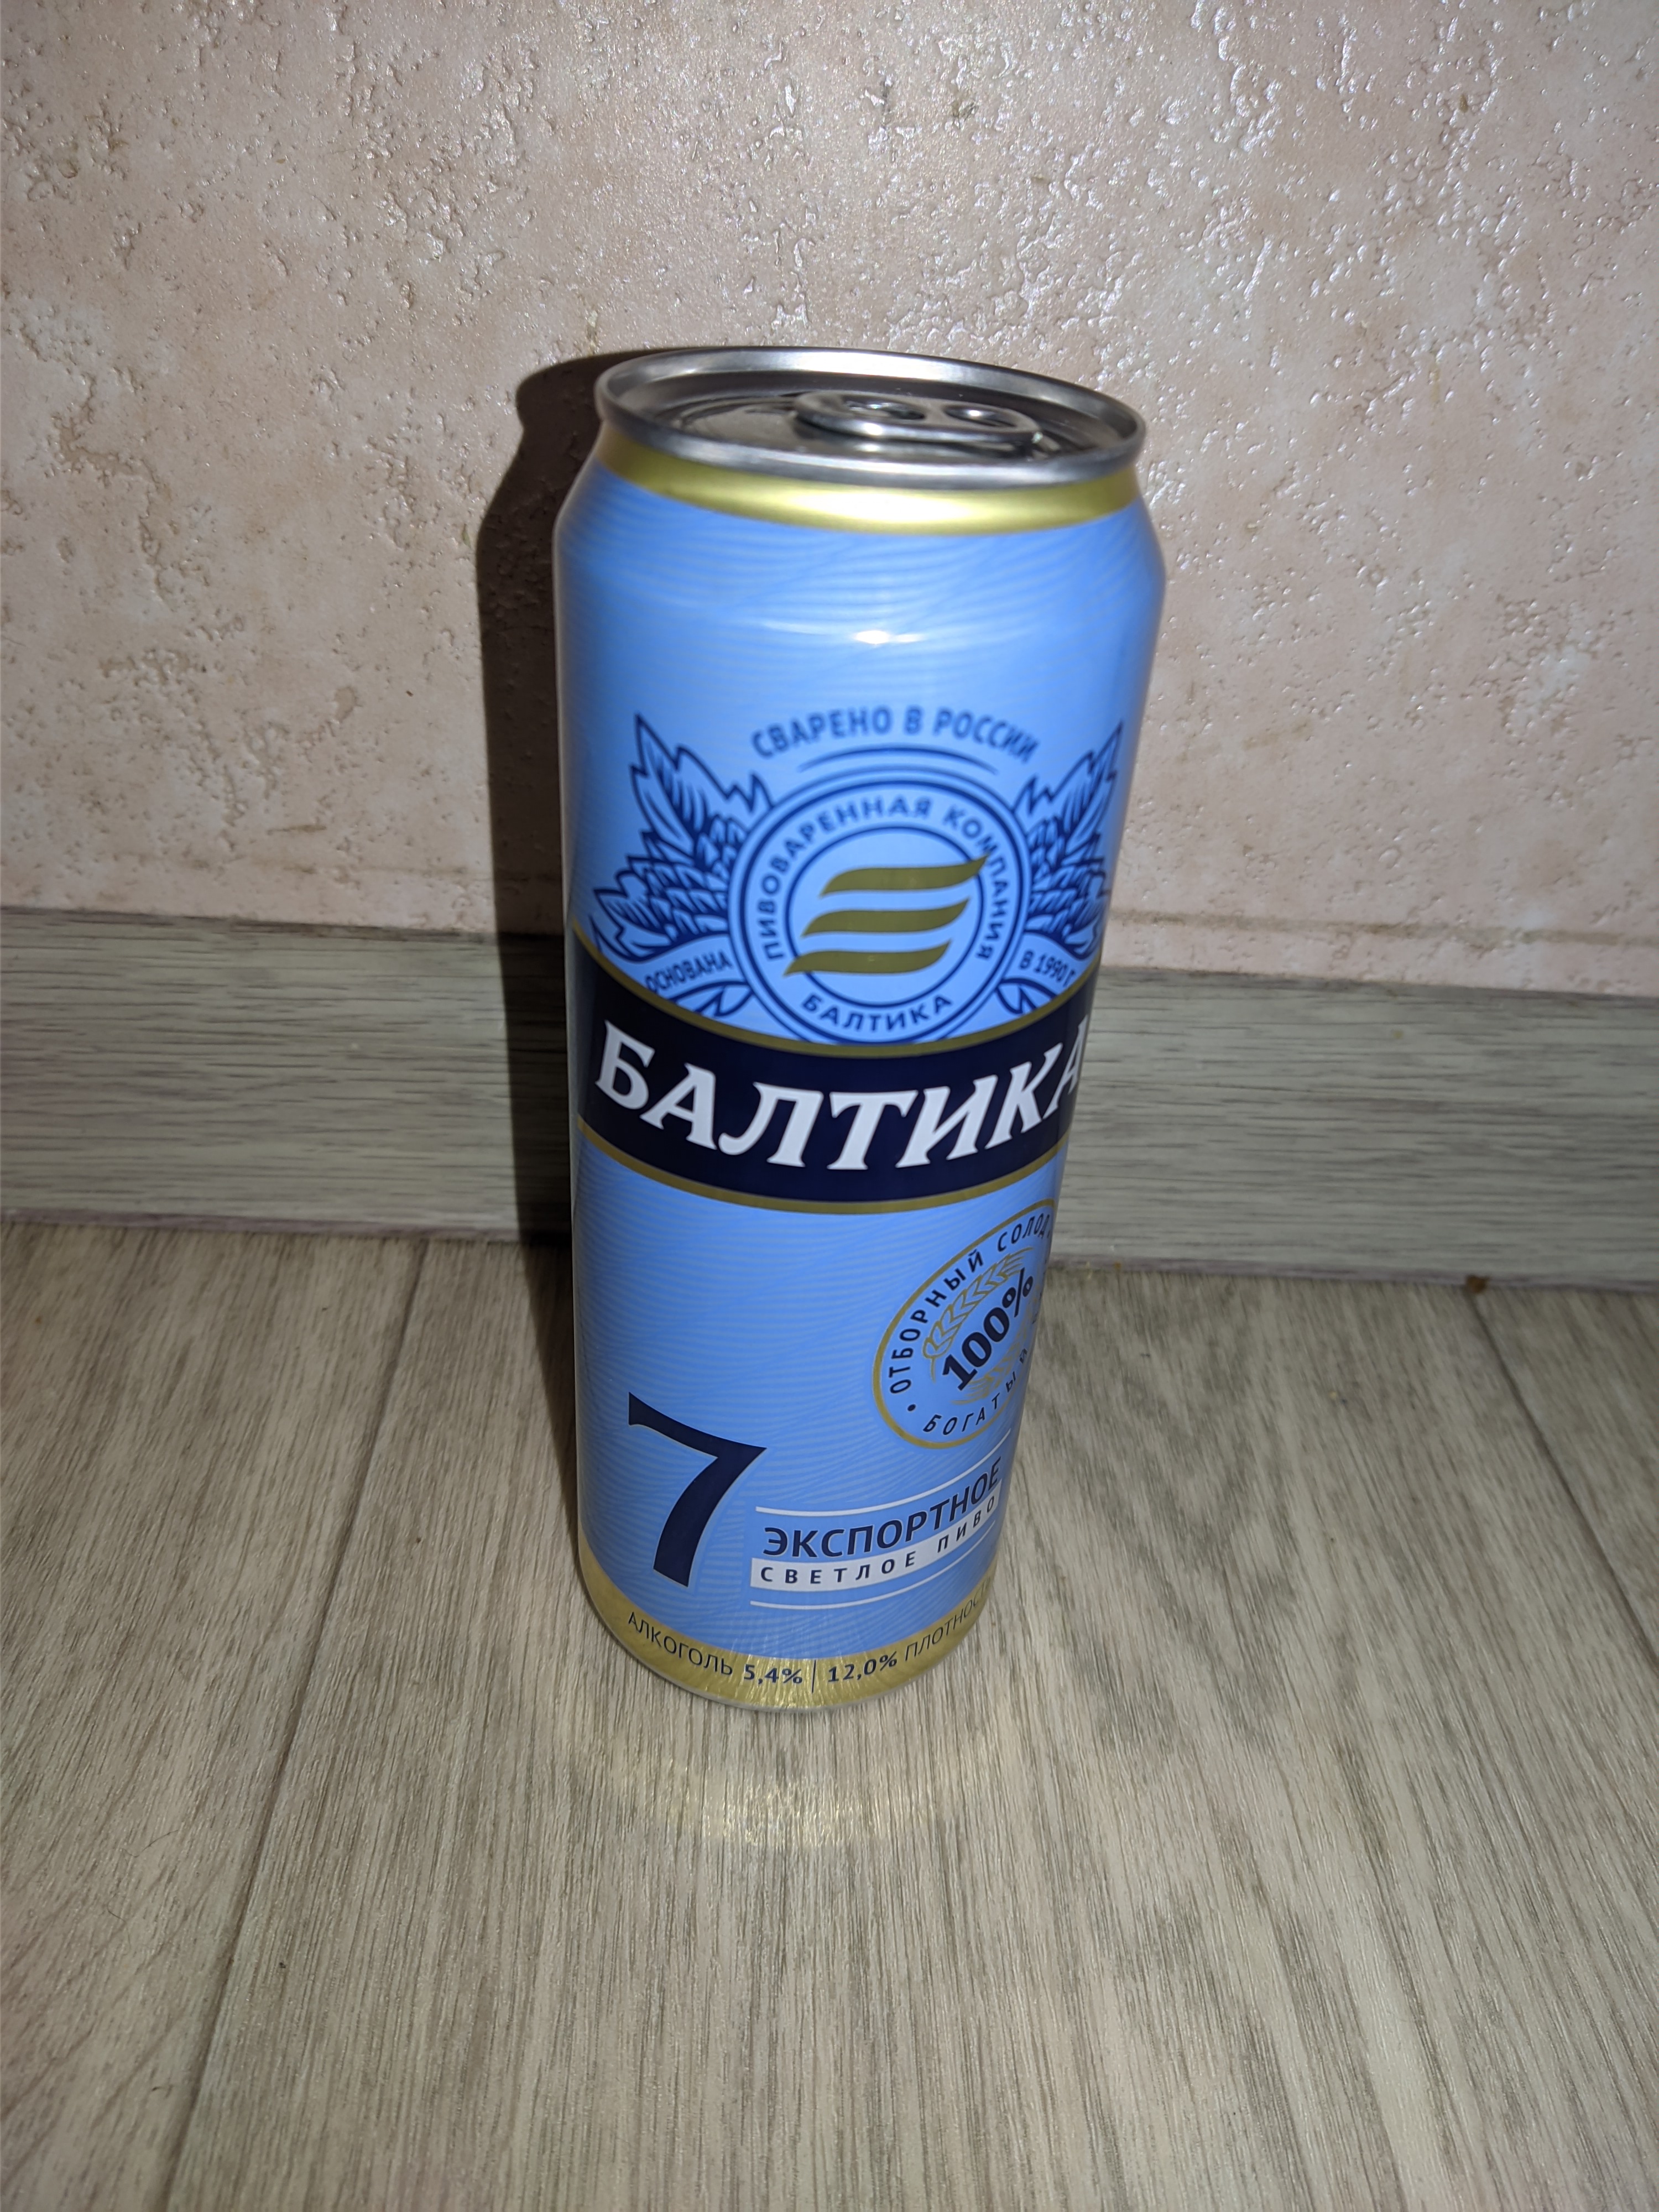 Балтика 7 экспортное